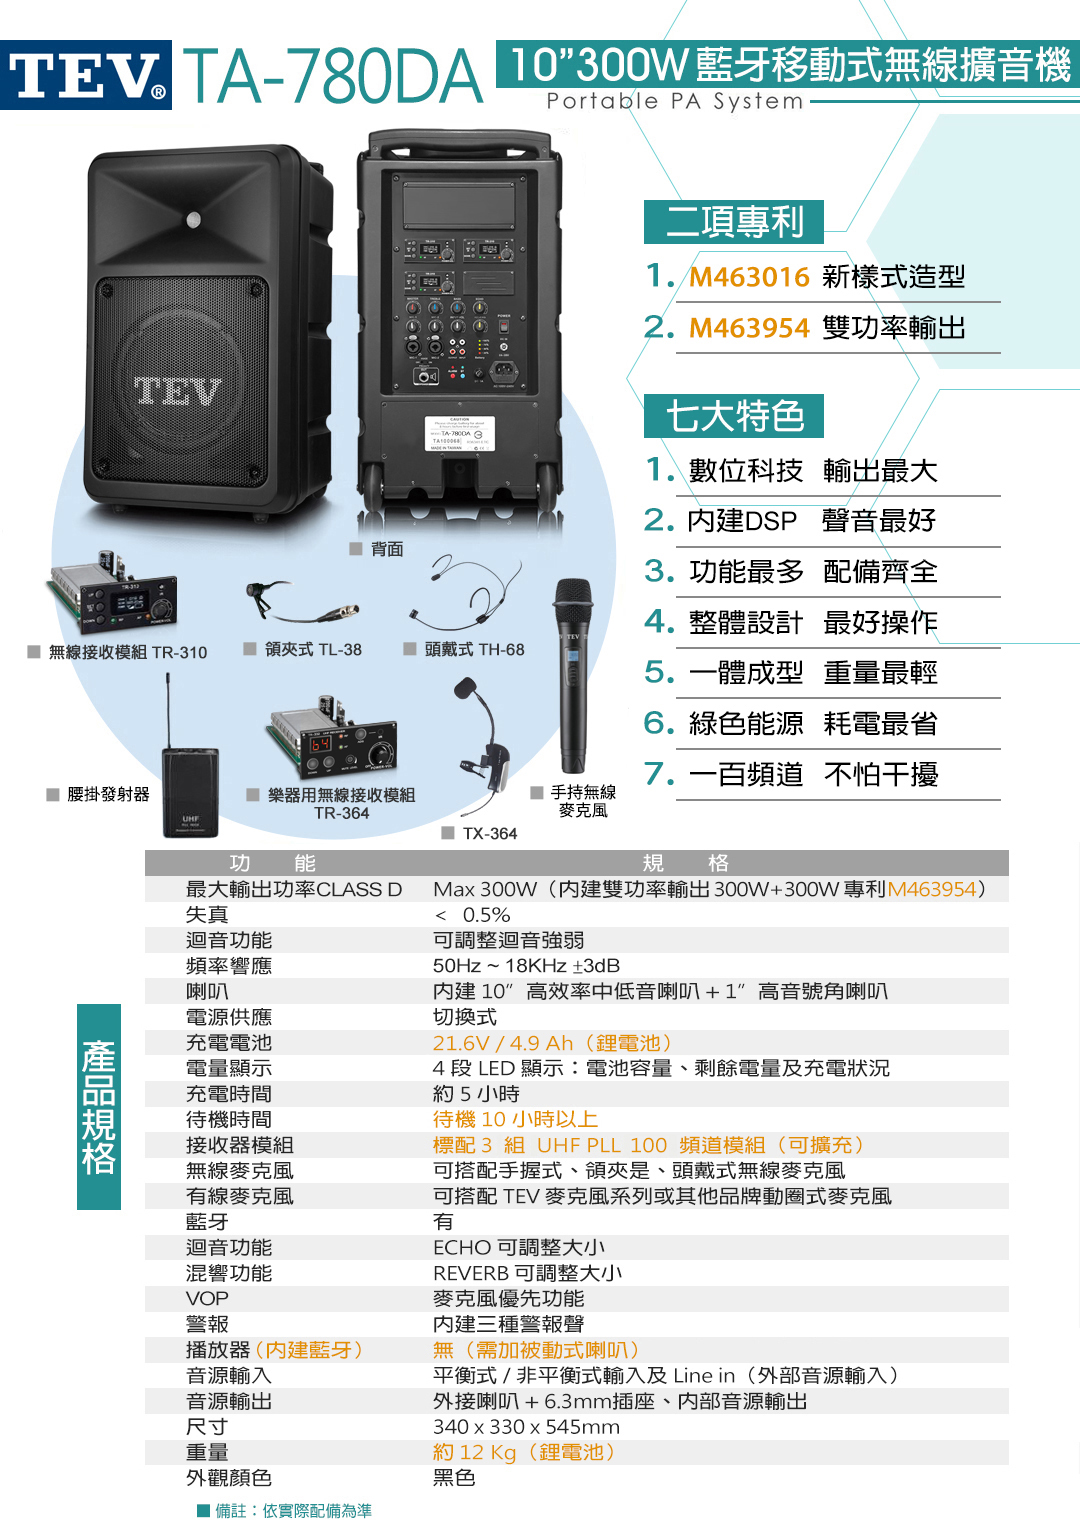 TA-780DA 10 300W 藍牙移動式無線擴音機Portable PA SystemTEV二項專利1.M463016 新樣式造型2. M463954 雙功率輸出七大特色1.數位科技 輸出最大2.內建DSP 聲音最好 背面3.功最多 配備齊全4.整體設計 最好操作 無線接收模組 TR-310  式 TL-38 頭戴式 TH-685.一體成型 重量最輕6.綠色能源 耗電最省7.一百頻道 不怕干擾TB-300 樂器用無線接收模組TR-364TM-8100TX-364規格Max 300W(內建雙功率輸出300W+300W專利M463954) 0.5%可調整迴音強弱50Hz~18KHz±3dB內建10高效率中低音喇叭+1高音號角喇叭切換式11.1V/5200mAh(電池)x24 段 LED 顯示:電池容量、剩餘電量及充電狀況約5小時待機10小時以上標配3 組 UHF PLL 100 頻道模組(可擴充)可搭配手握式、領夾是、頭戴式無線麥克風可搭配 TEV 麥克風系列或其他品牌動圈式麥克風有ECHO 可調整大小REVERB 可調整大小麥克風優先功能功能最大輸出功率CLASS D失真迴音功能頻率響應喇叭電源供應充電電池電量顯示充電時間待機時間接收器模組無線麥克風有線麥克風藍牙迴音功能混響功能VOP警報播放器(內建藍牙)音源輸入音源輸出尺寸重量外觀顏色 備註:依實際配備為準内建三種警報聲無(需加被動式喇叭)平衡式/非平衡式輸入及 Line in (外部音源輸入)外接喇叭+6.3mm插座、內部音源輸出340 x 330 x 545mm約13Kg(電池)黑色